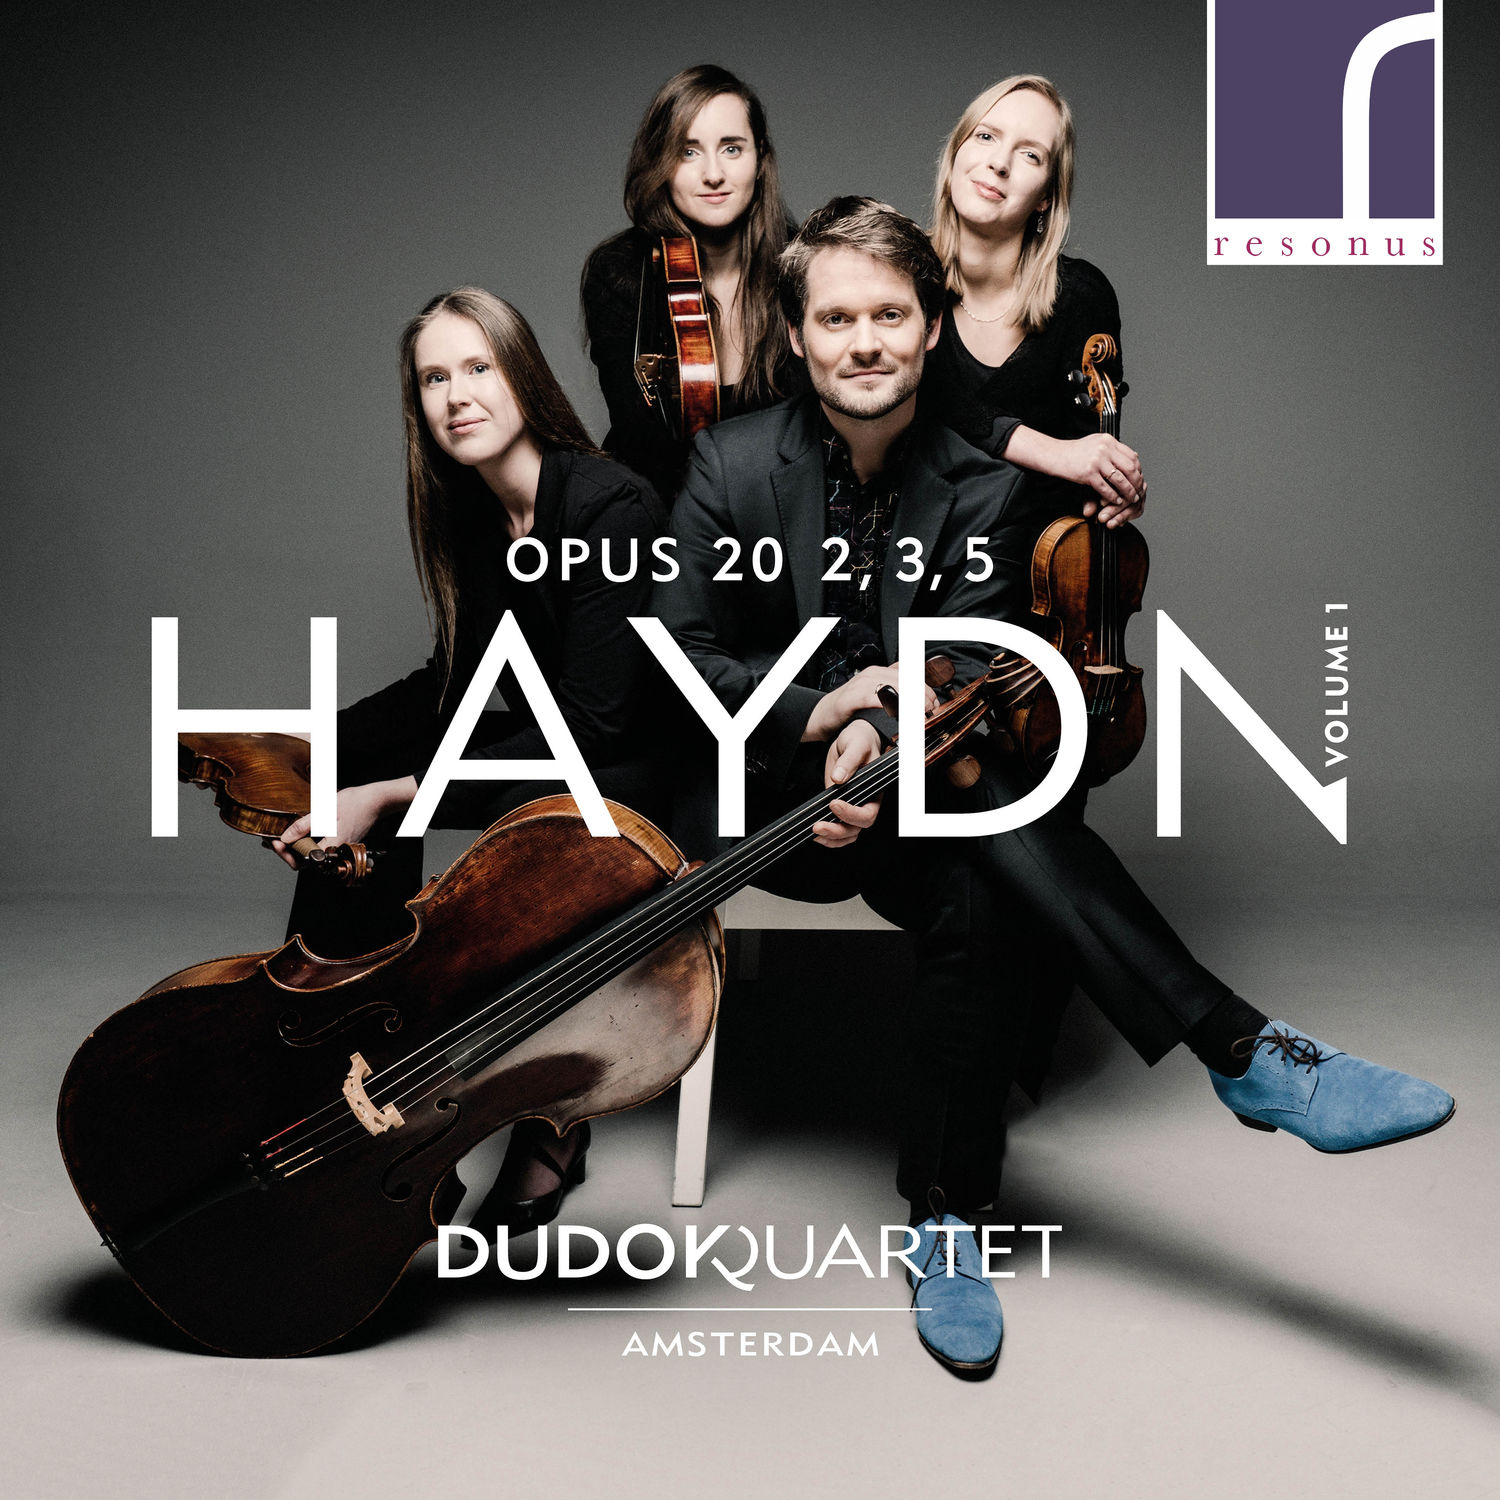 Dudok Quartet Amsterdam - Haydn: String Quartets, Op. 20, Volume 1, Nos. 2, 3 & 5 (2019) [FLAC 24bit/96kHz]